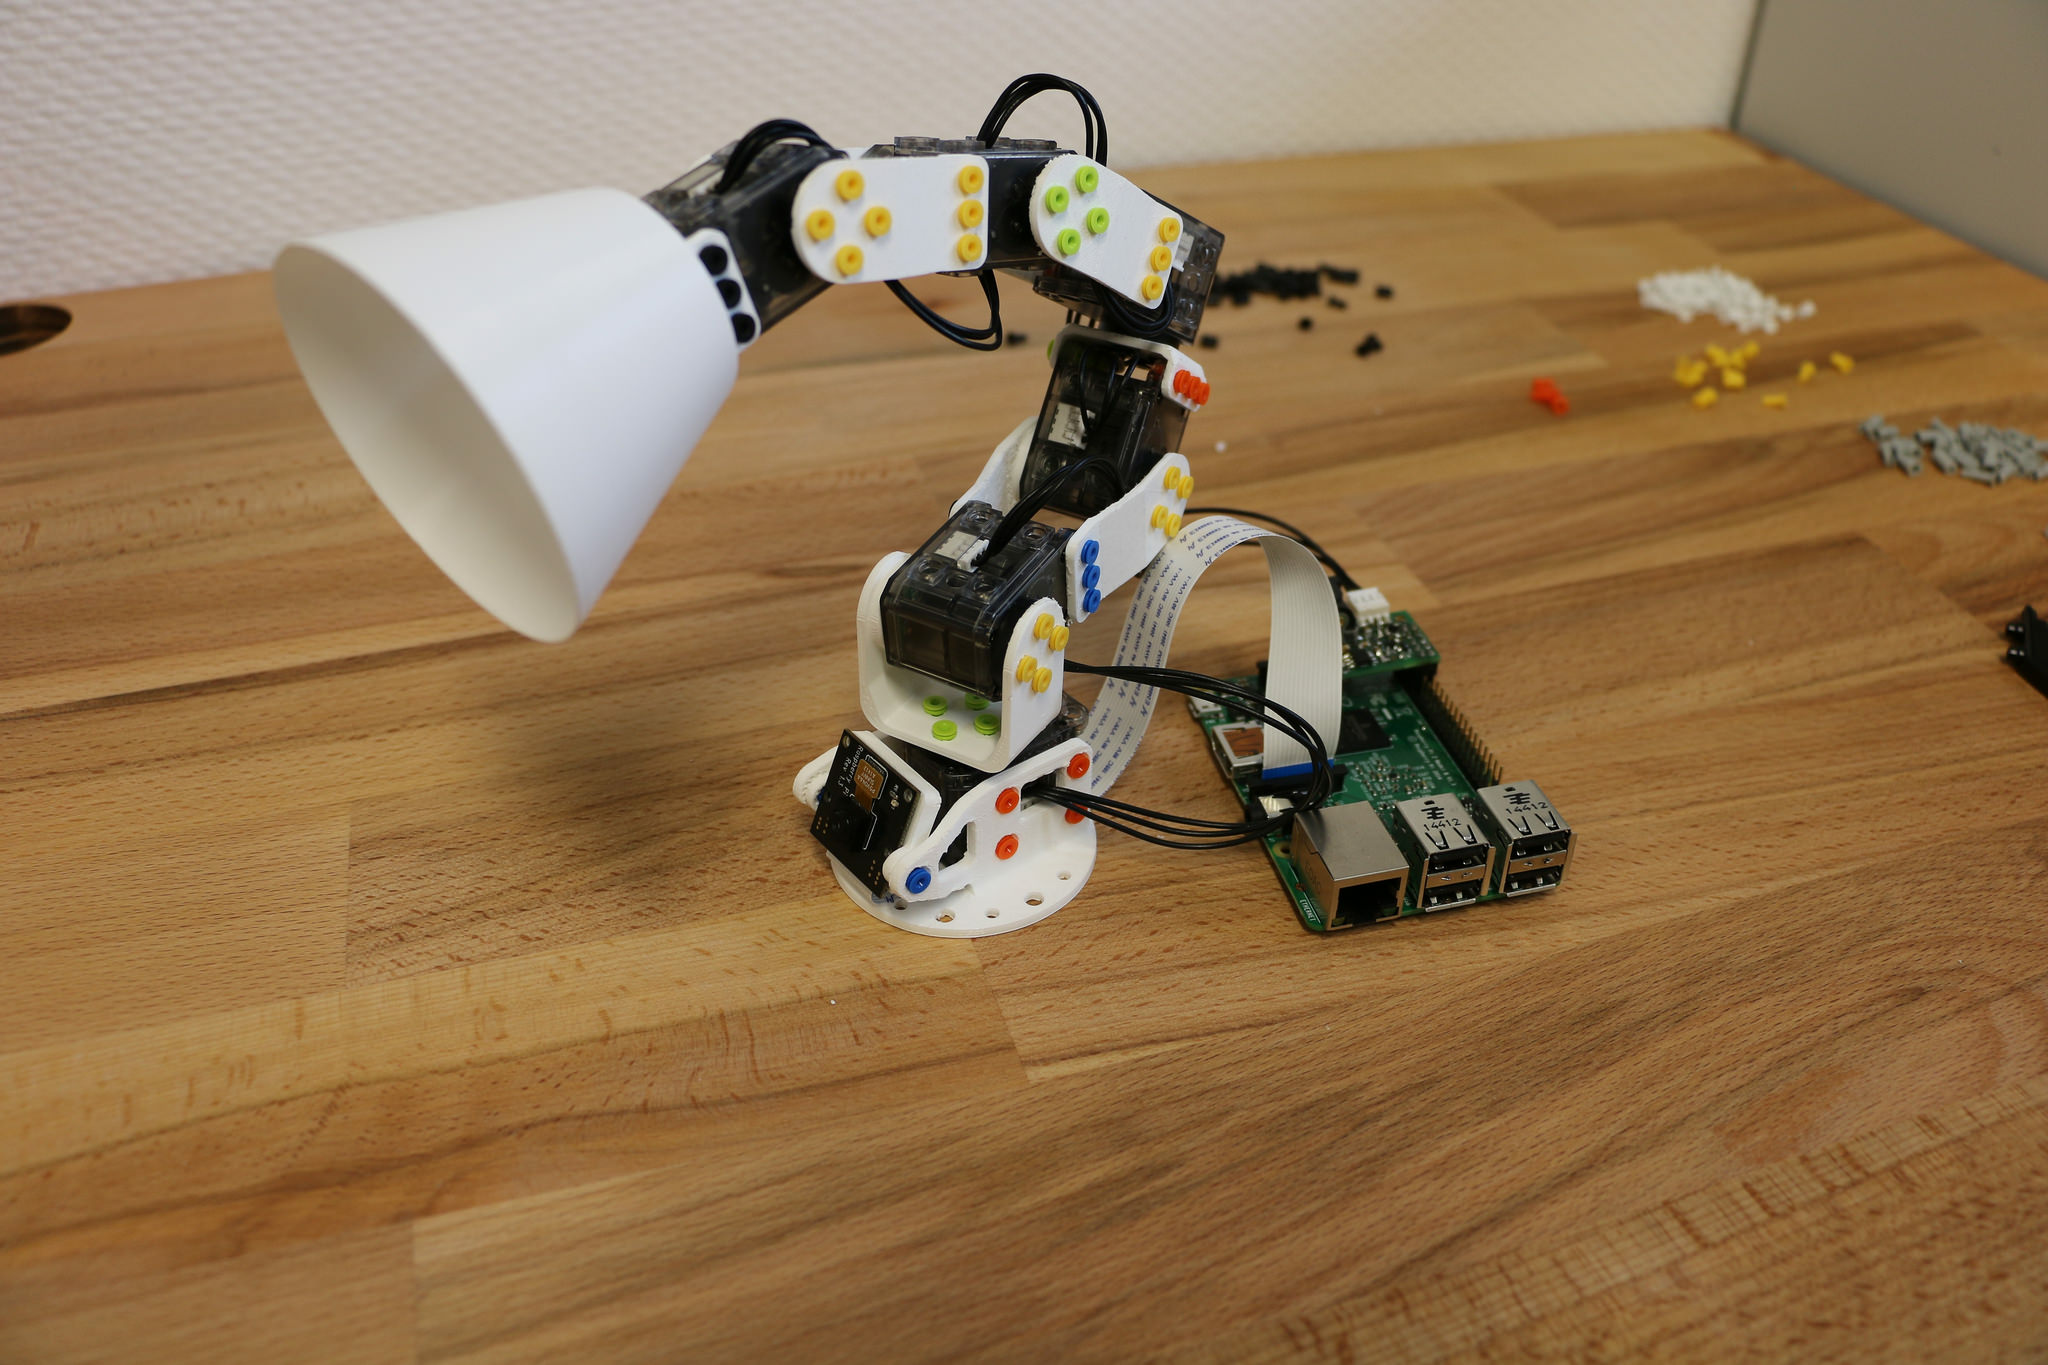 Poppy Ergo Jr, 6-DoFs arm robot for education